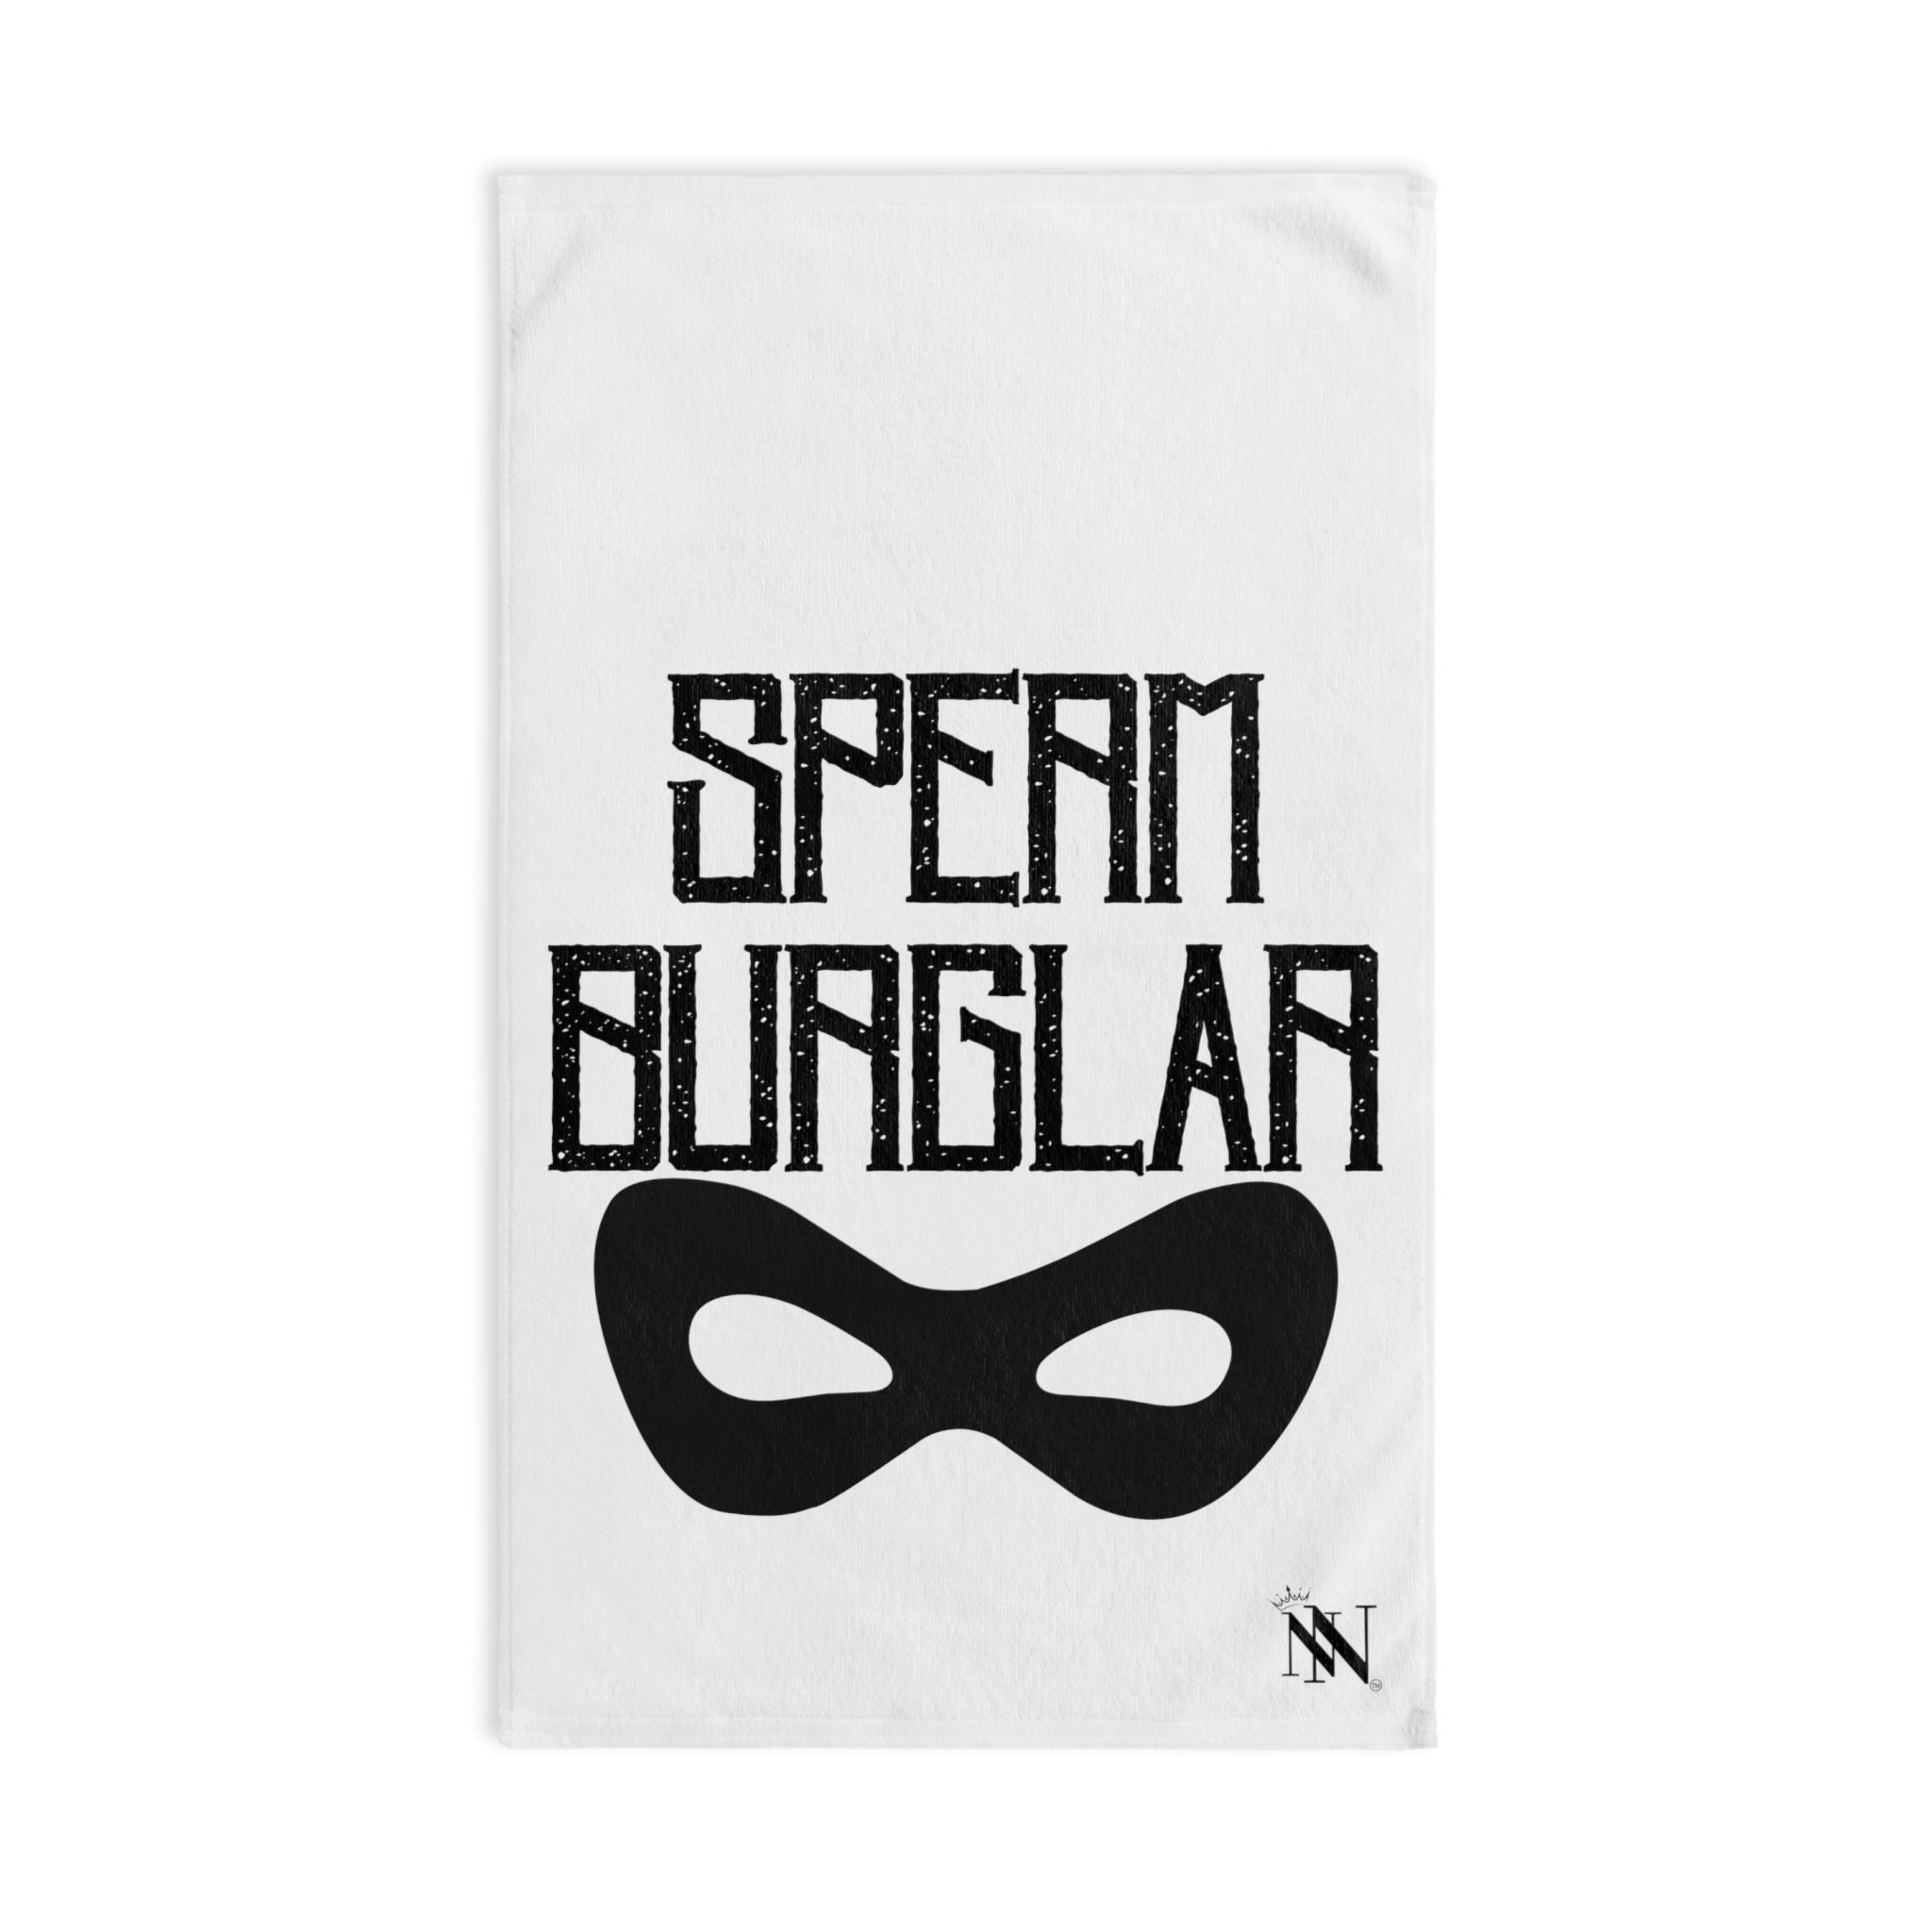 Sperm Burglar | Nectar Napkins Fun-Flirty Lovers' After Sex Towels NECTAR NAPKINS